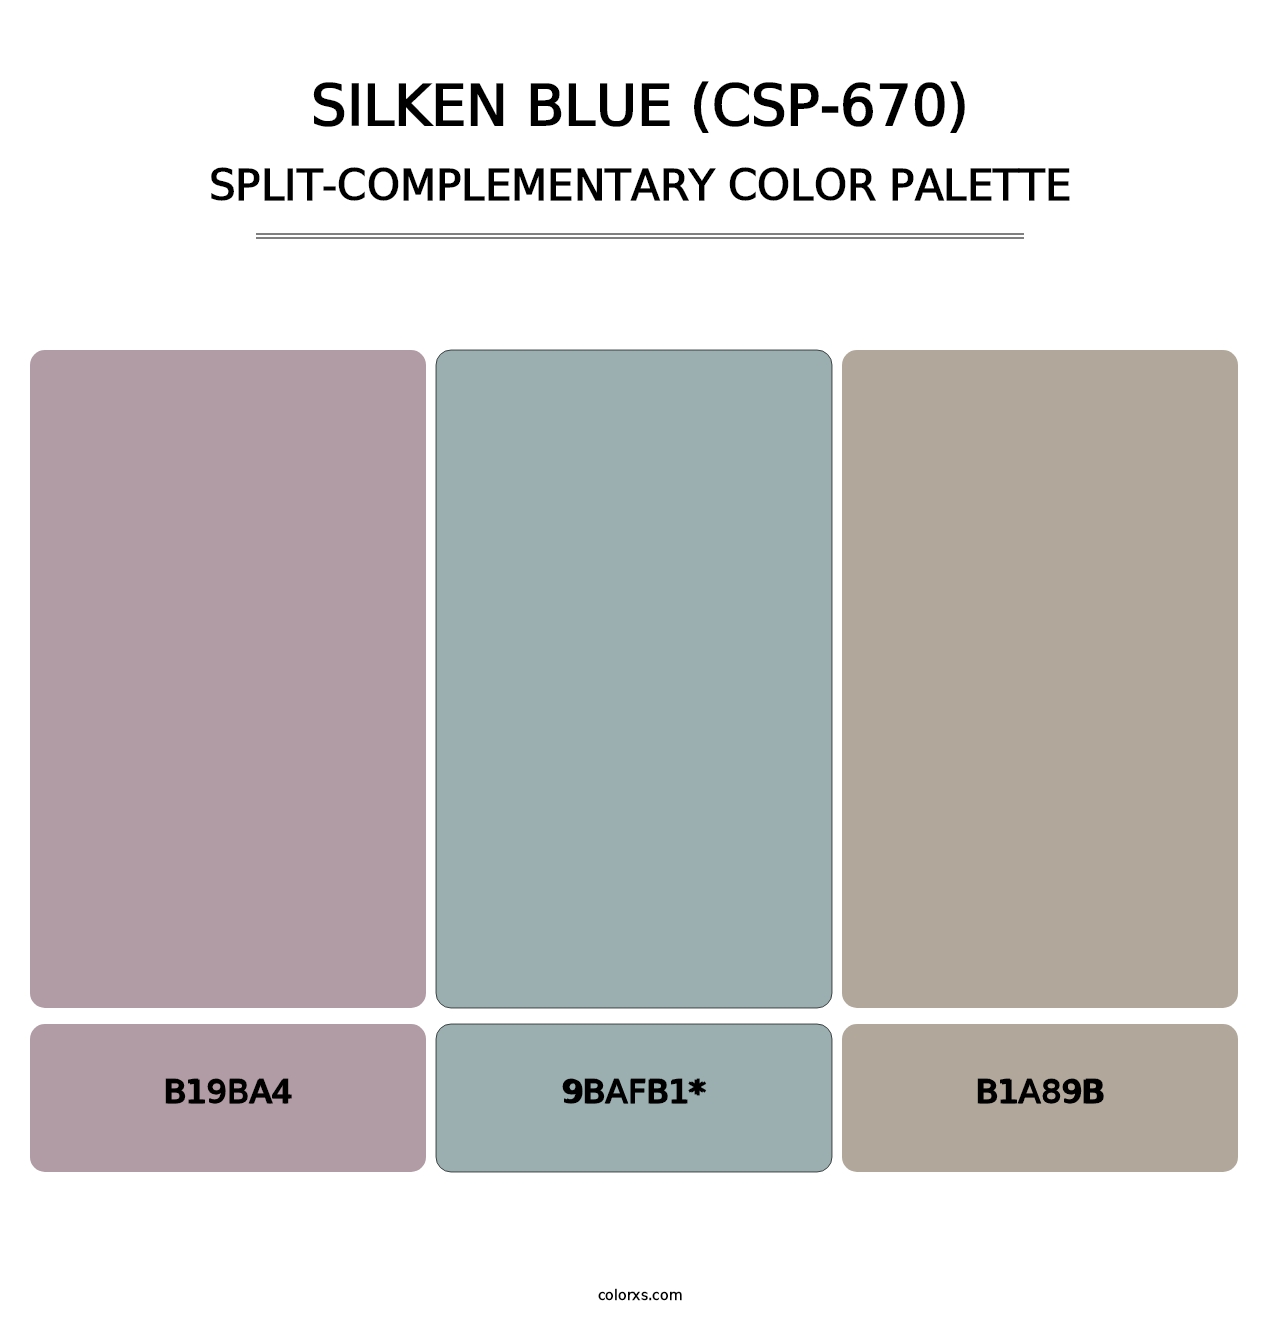 Silken Blue (CSP-670) - Split-Complementary Color Palette